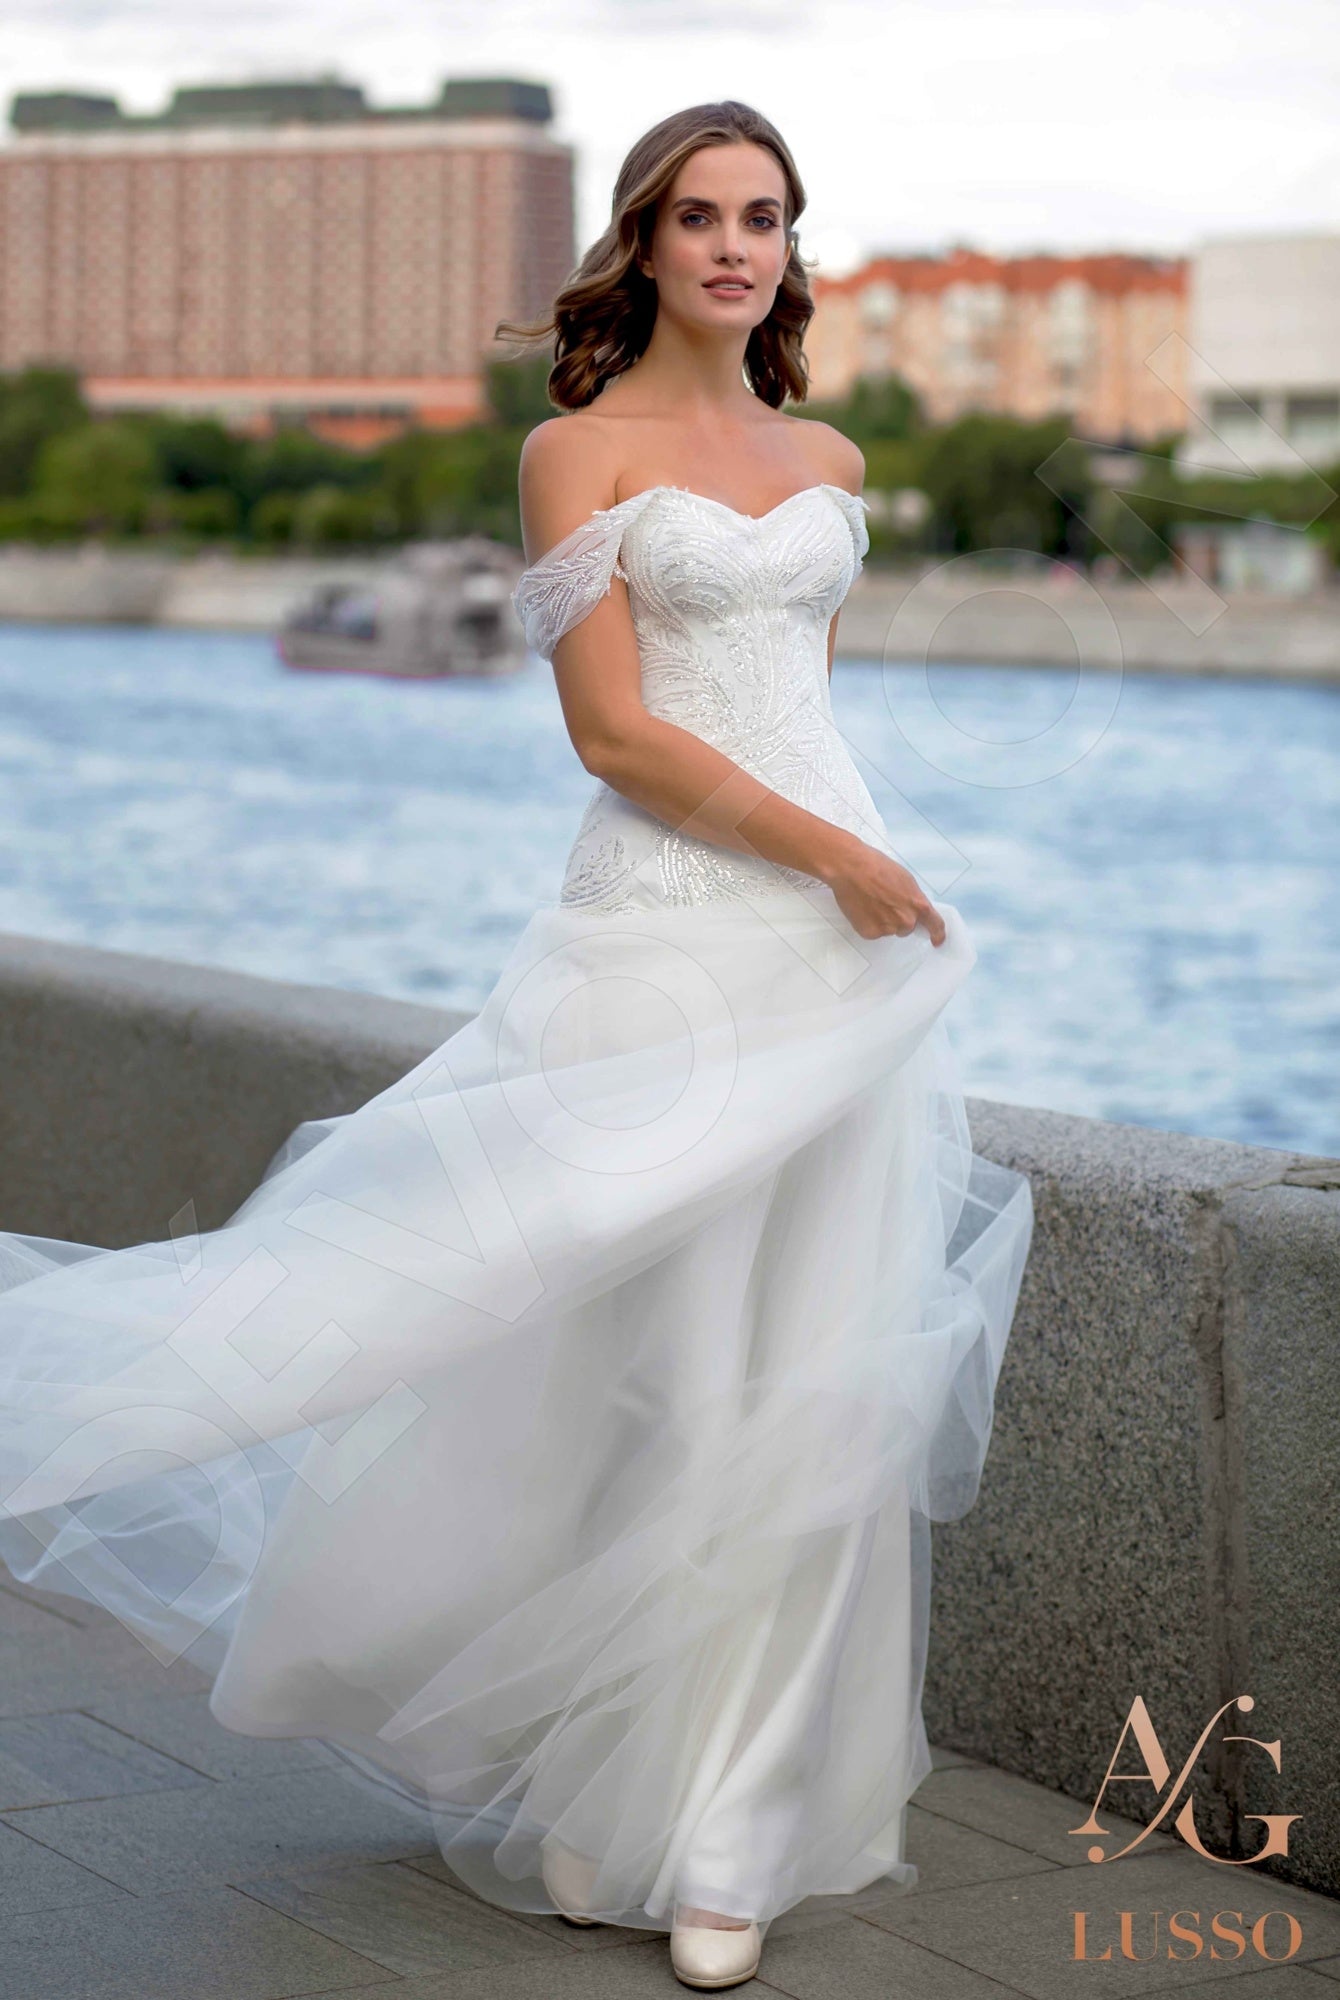 Angela Open back A-line Sleeveless Wedding Dress Front